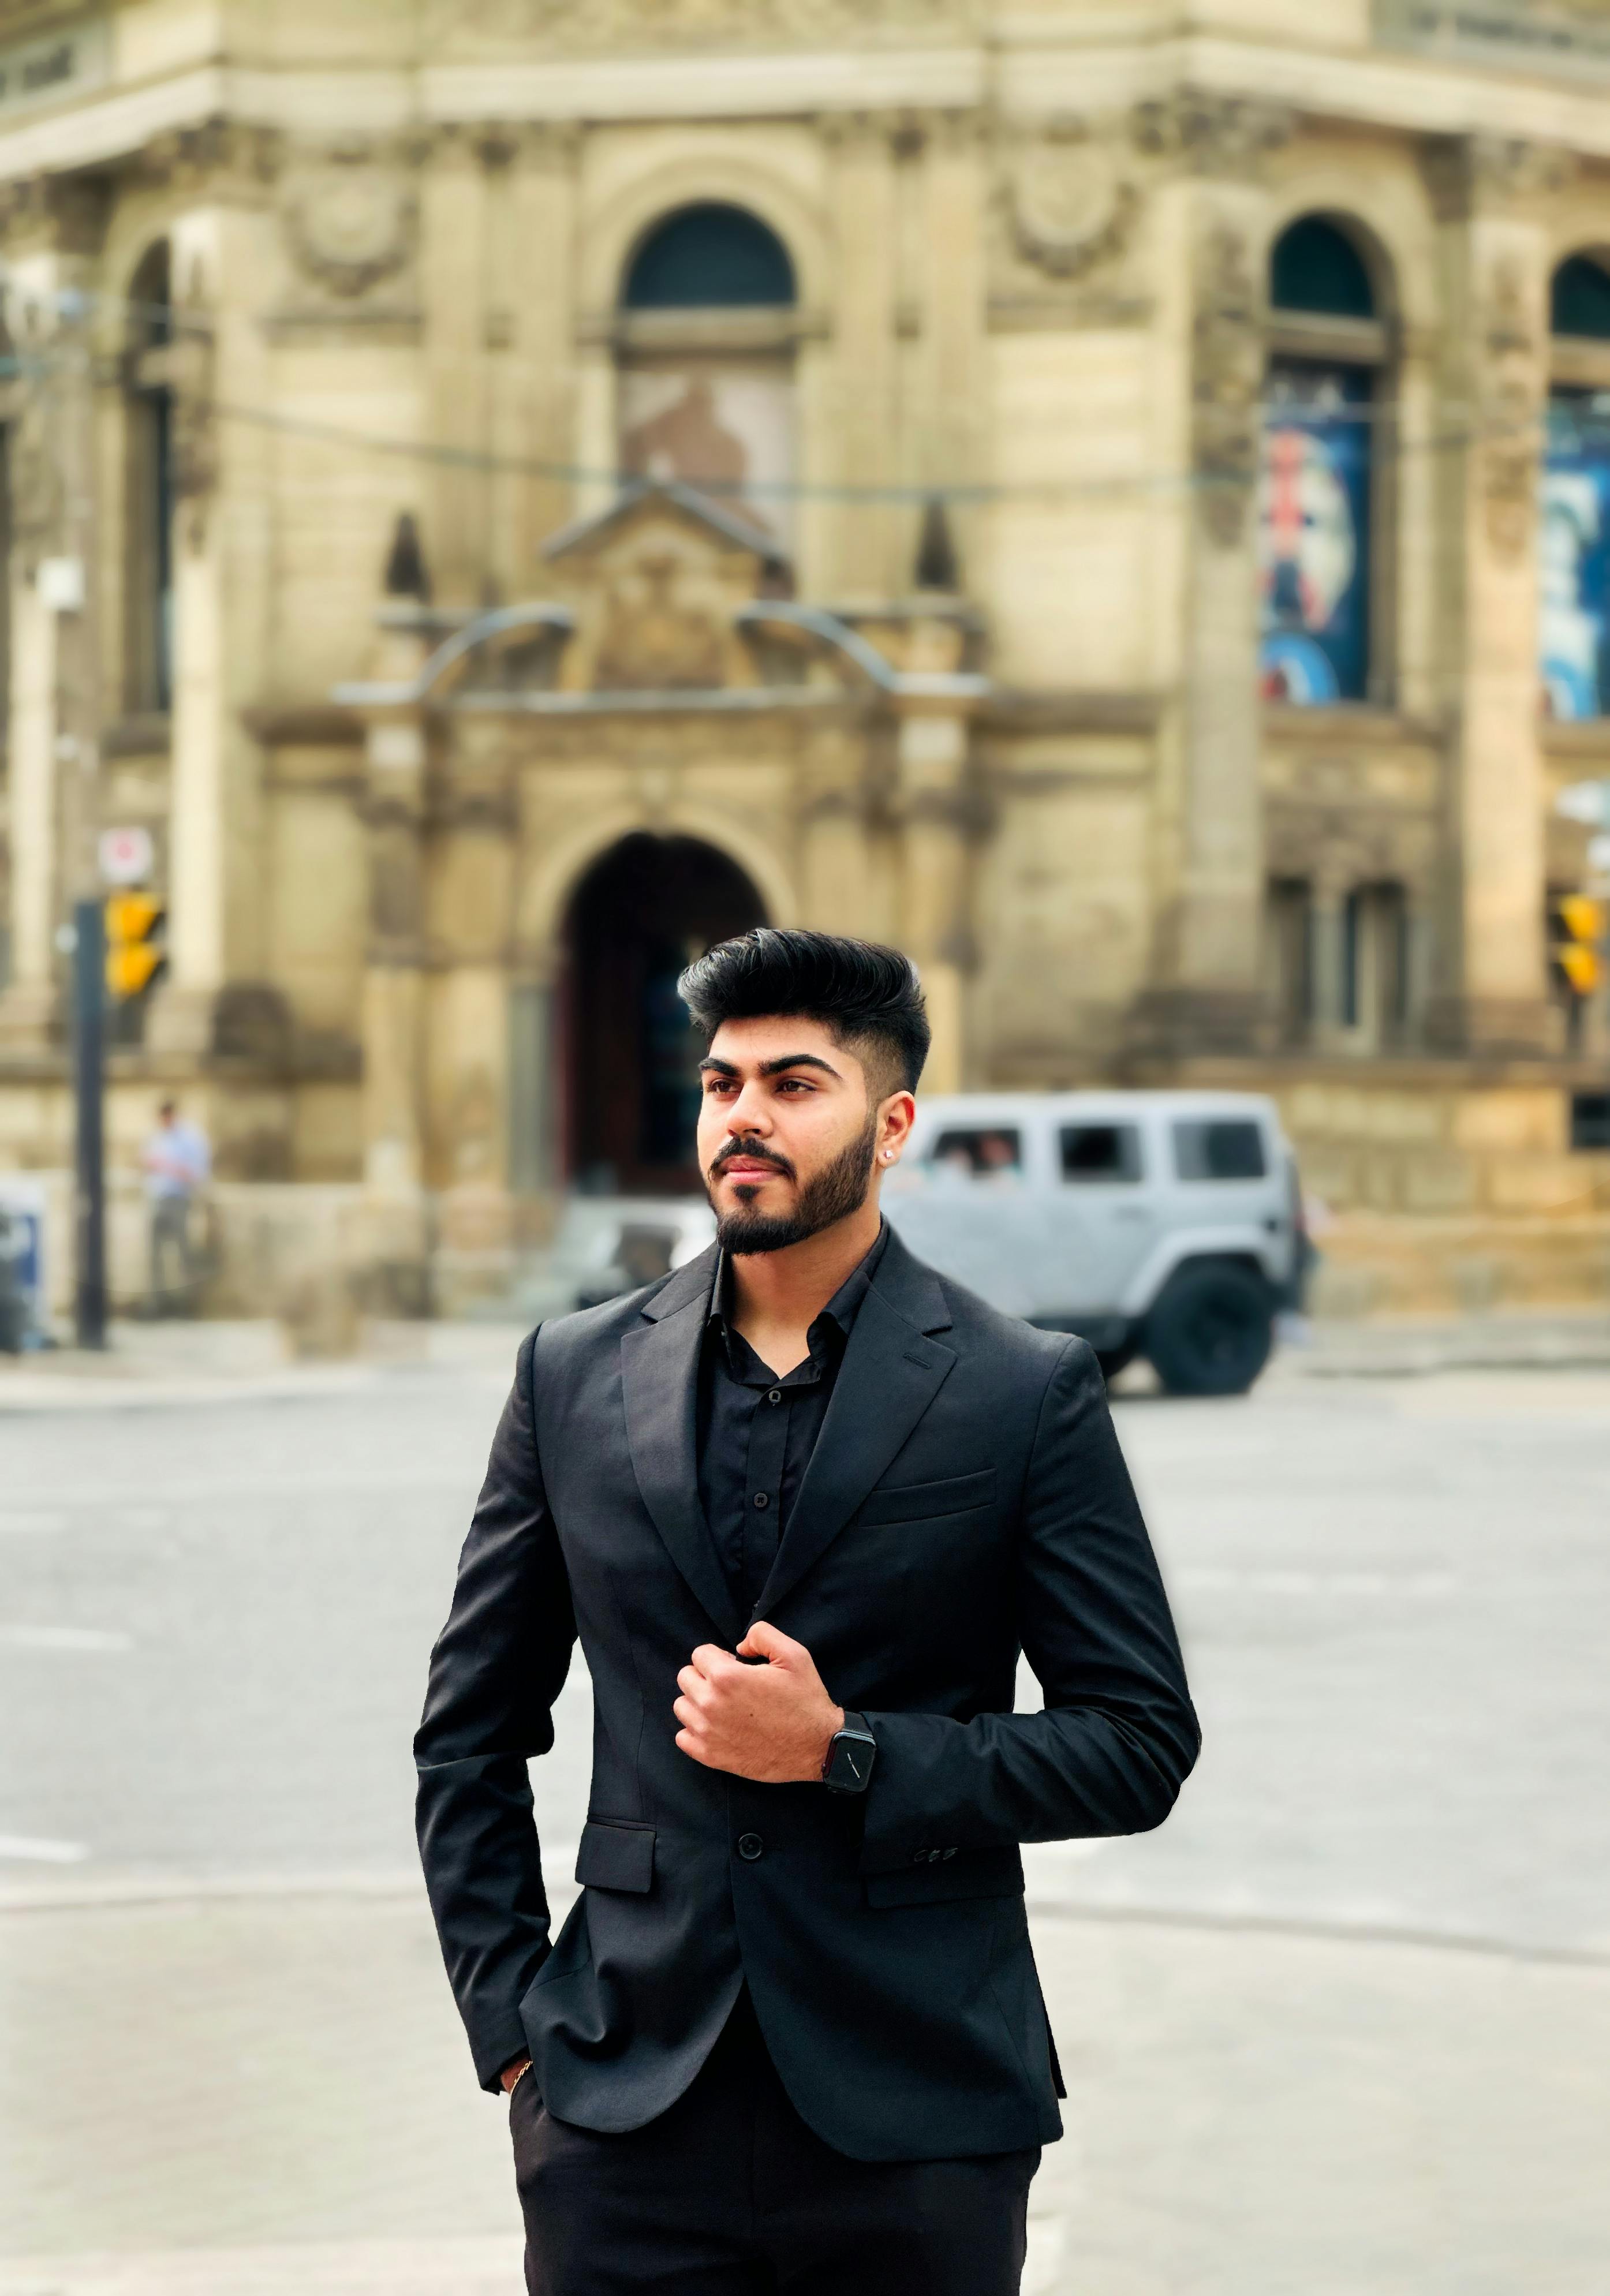 Black Suits For Men: Should You Wear Them? Smarter Outfit Options